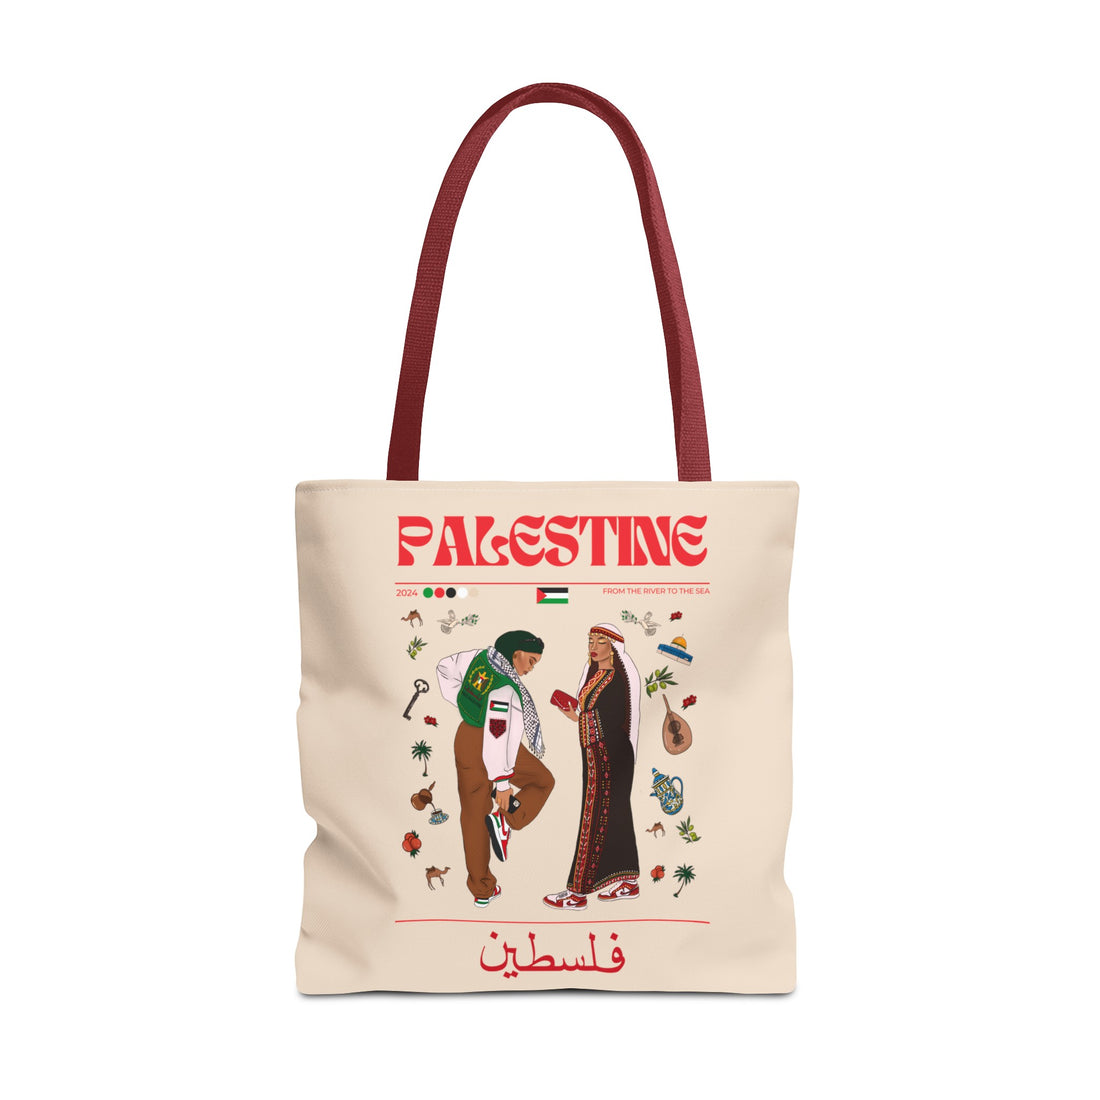 Palestine x Streetwear Tote Bag